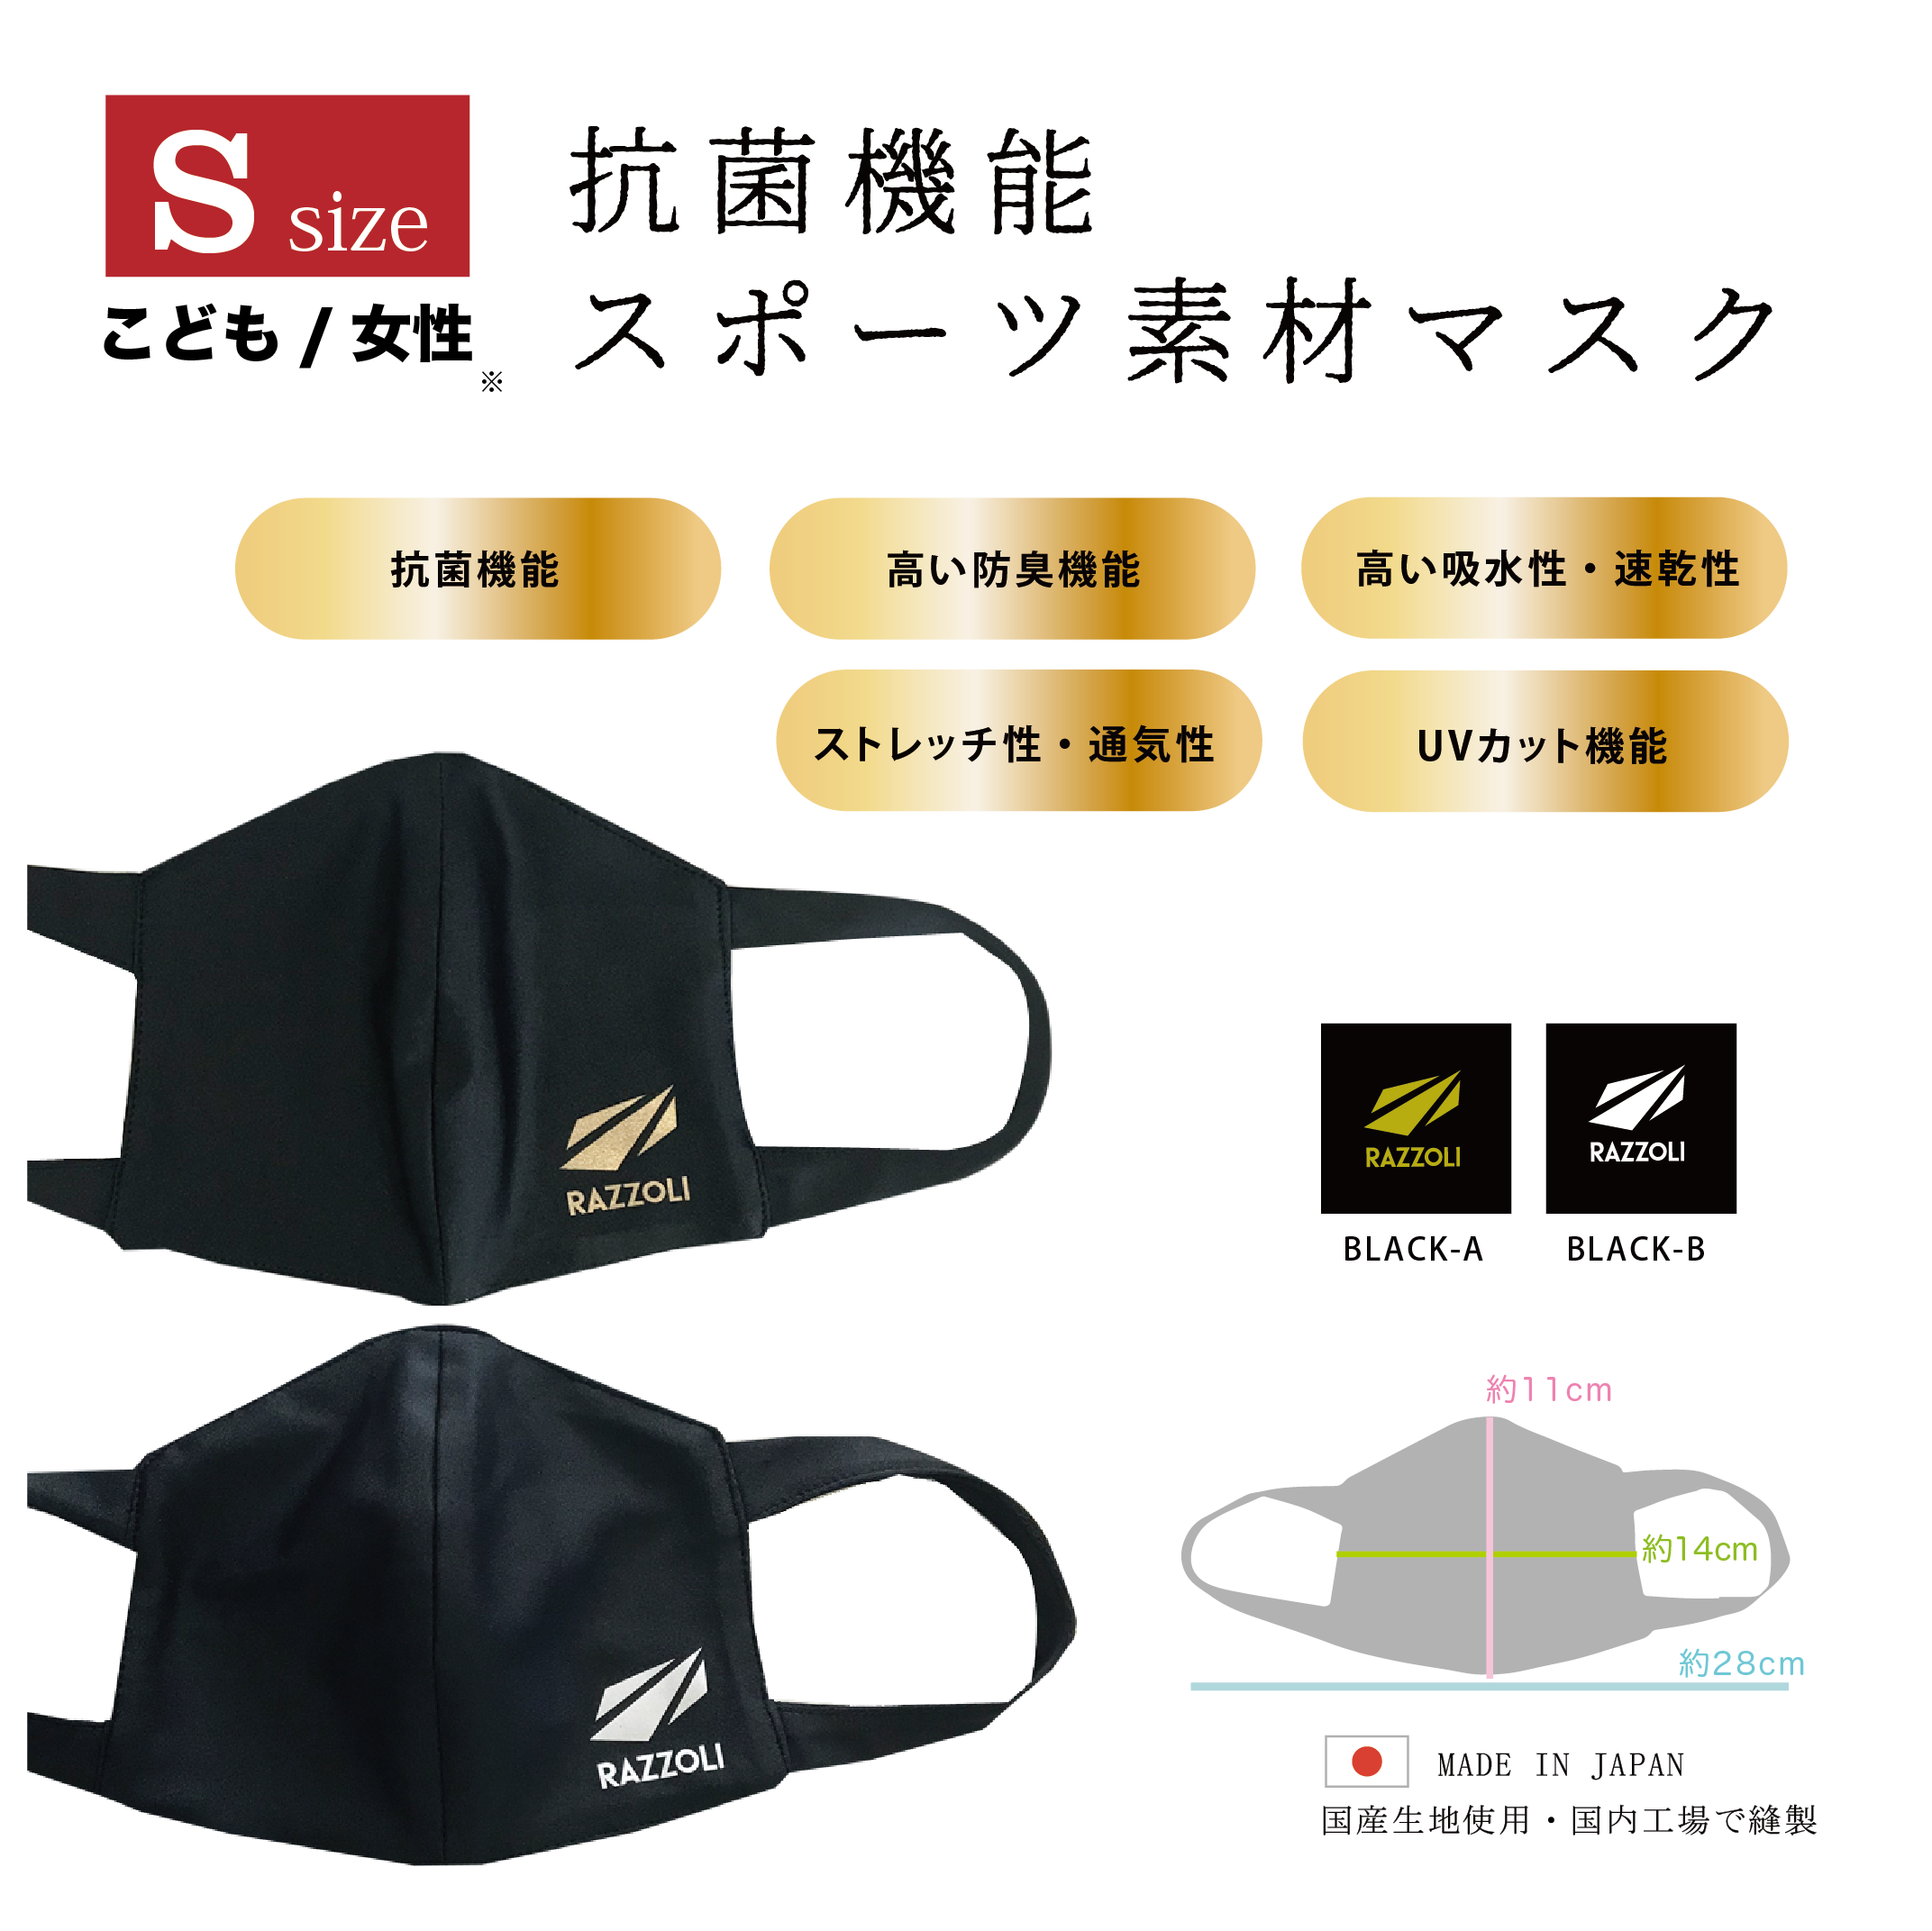 Sankei Online Store Rzzmask01 抗菌スポーツ素材マスク S